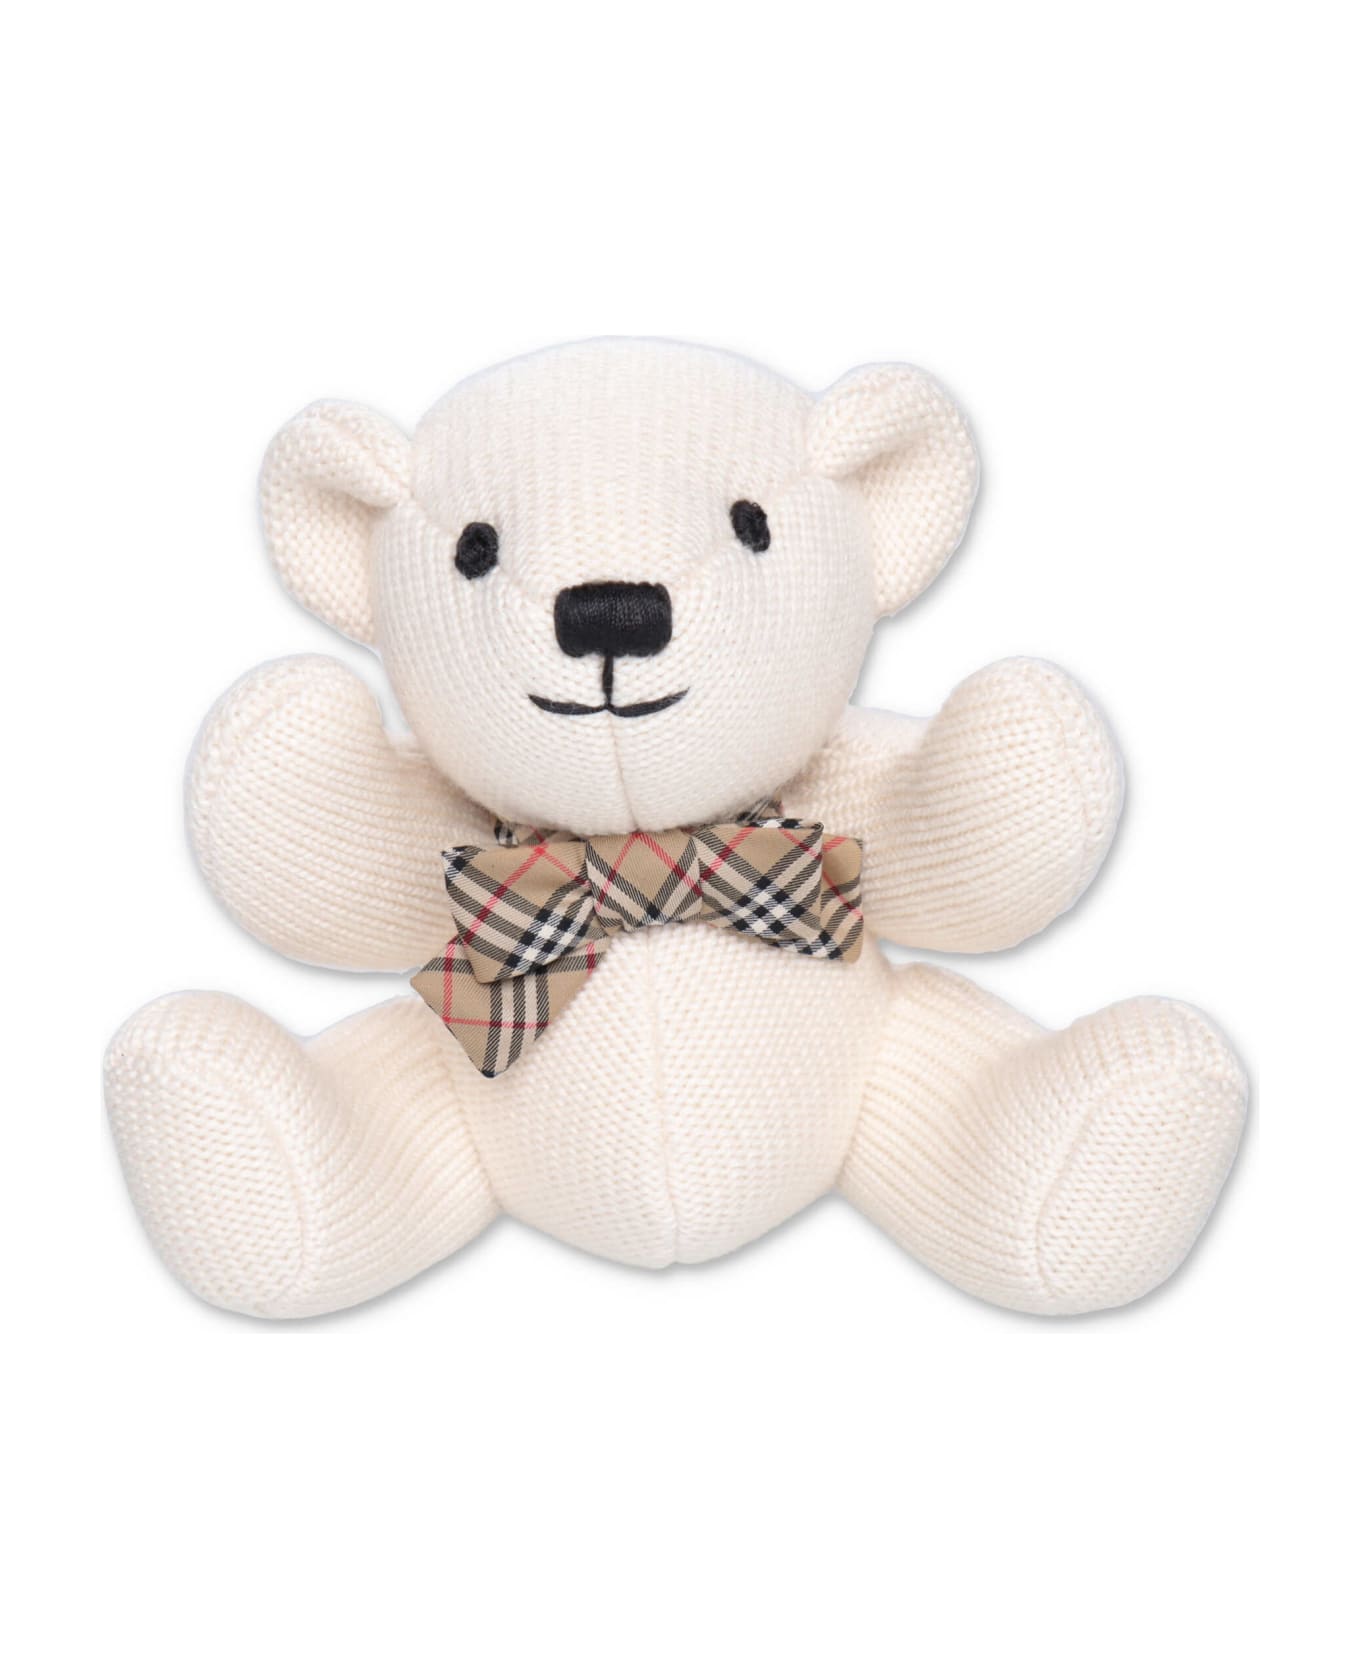 Burberry Peluche Teddy Bear Bianco In Maglia Di Lana Baby - Bianco